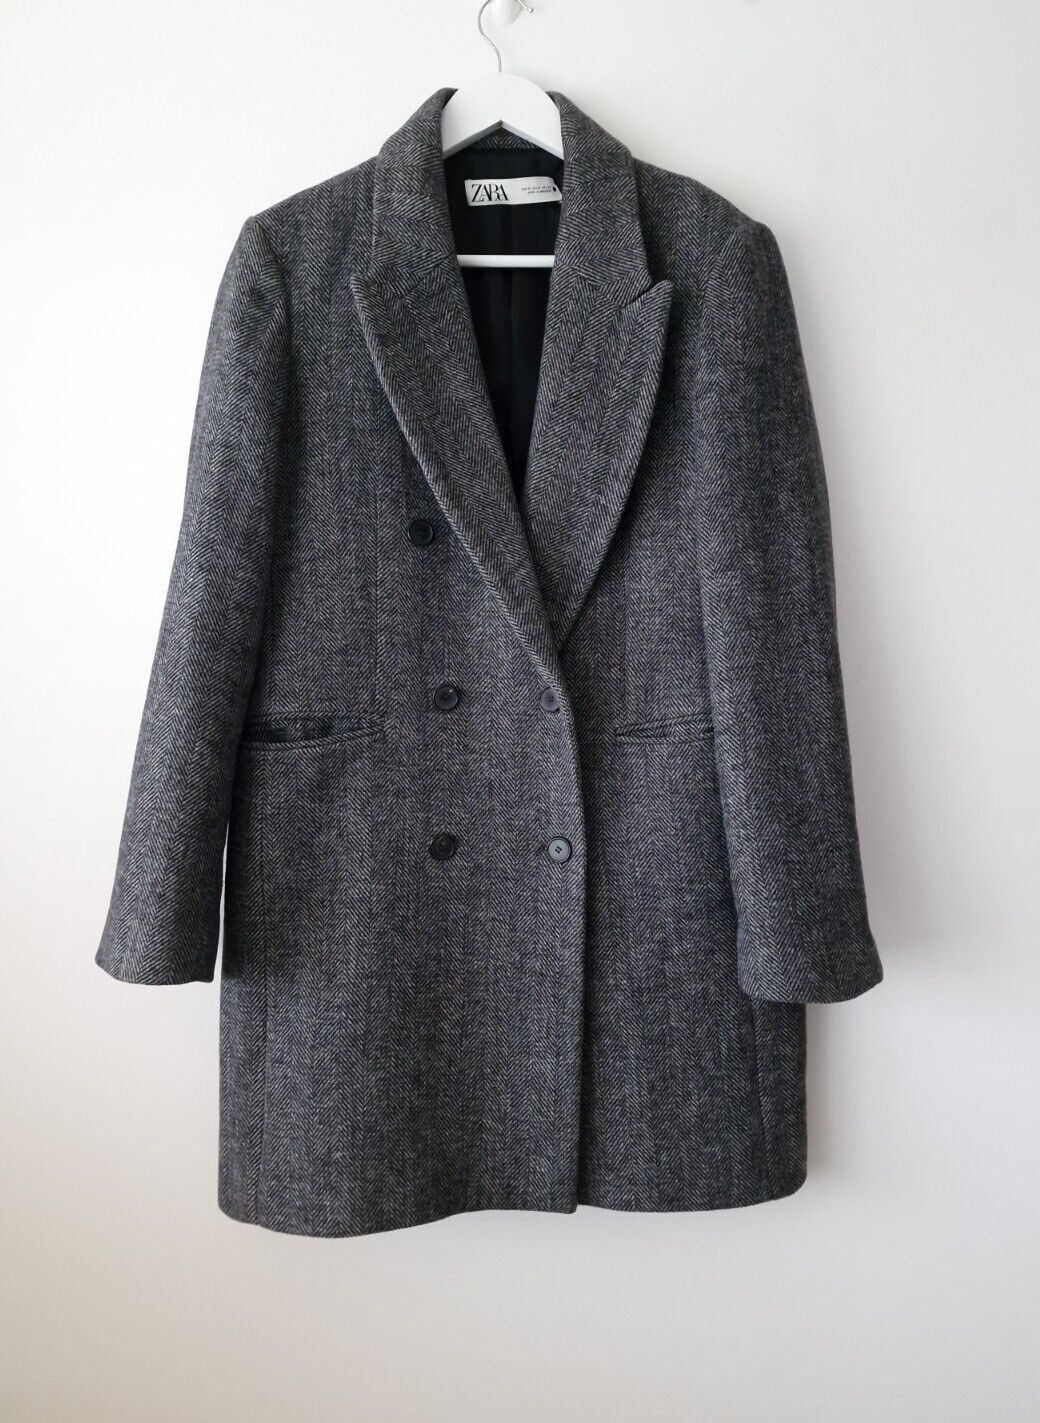 Zara Ladies Herringbone Wool Blend Oversized Masculine Jacket Coat Size ...